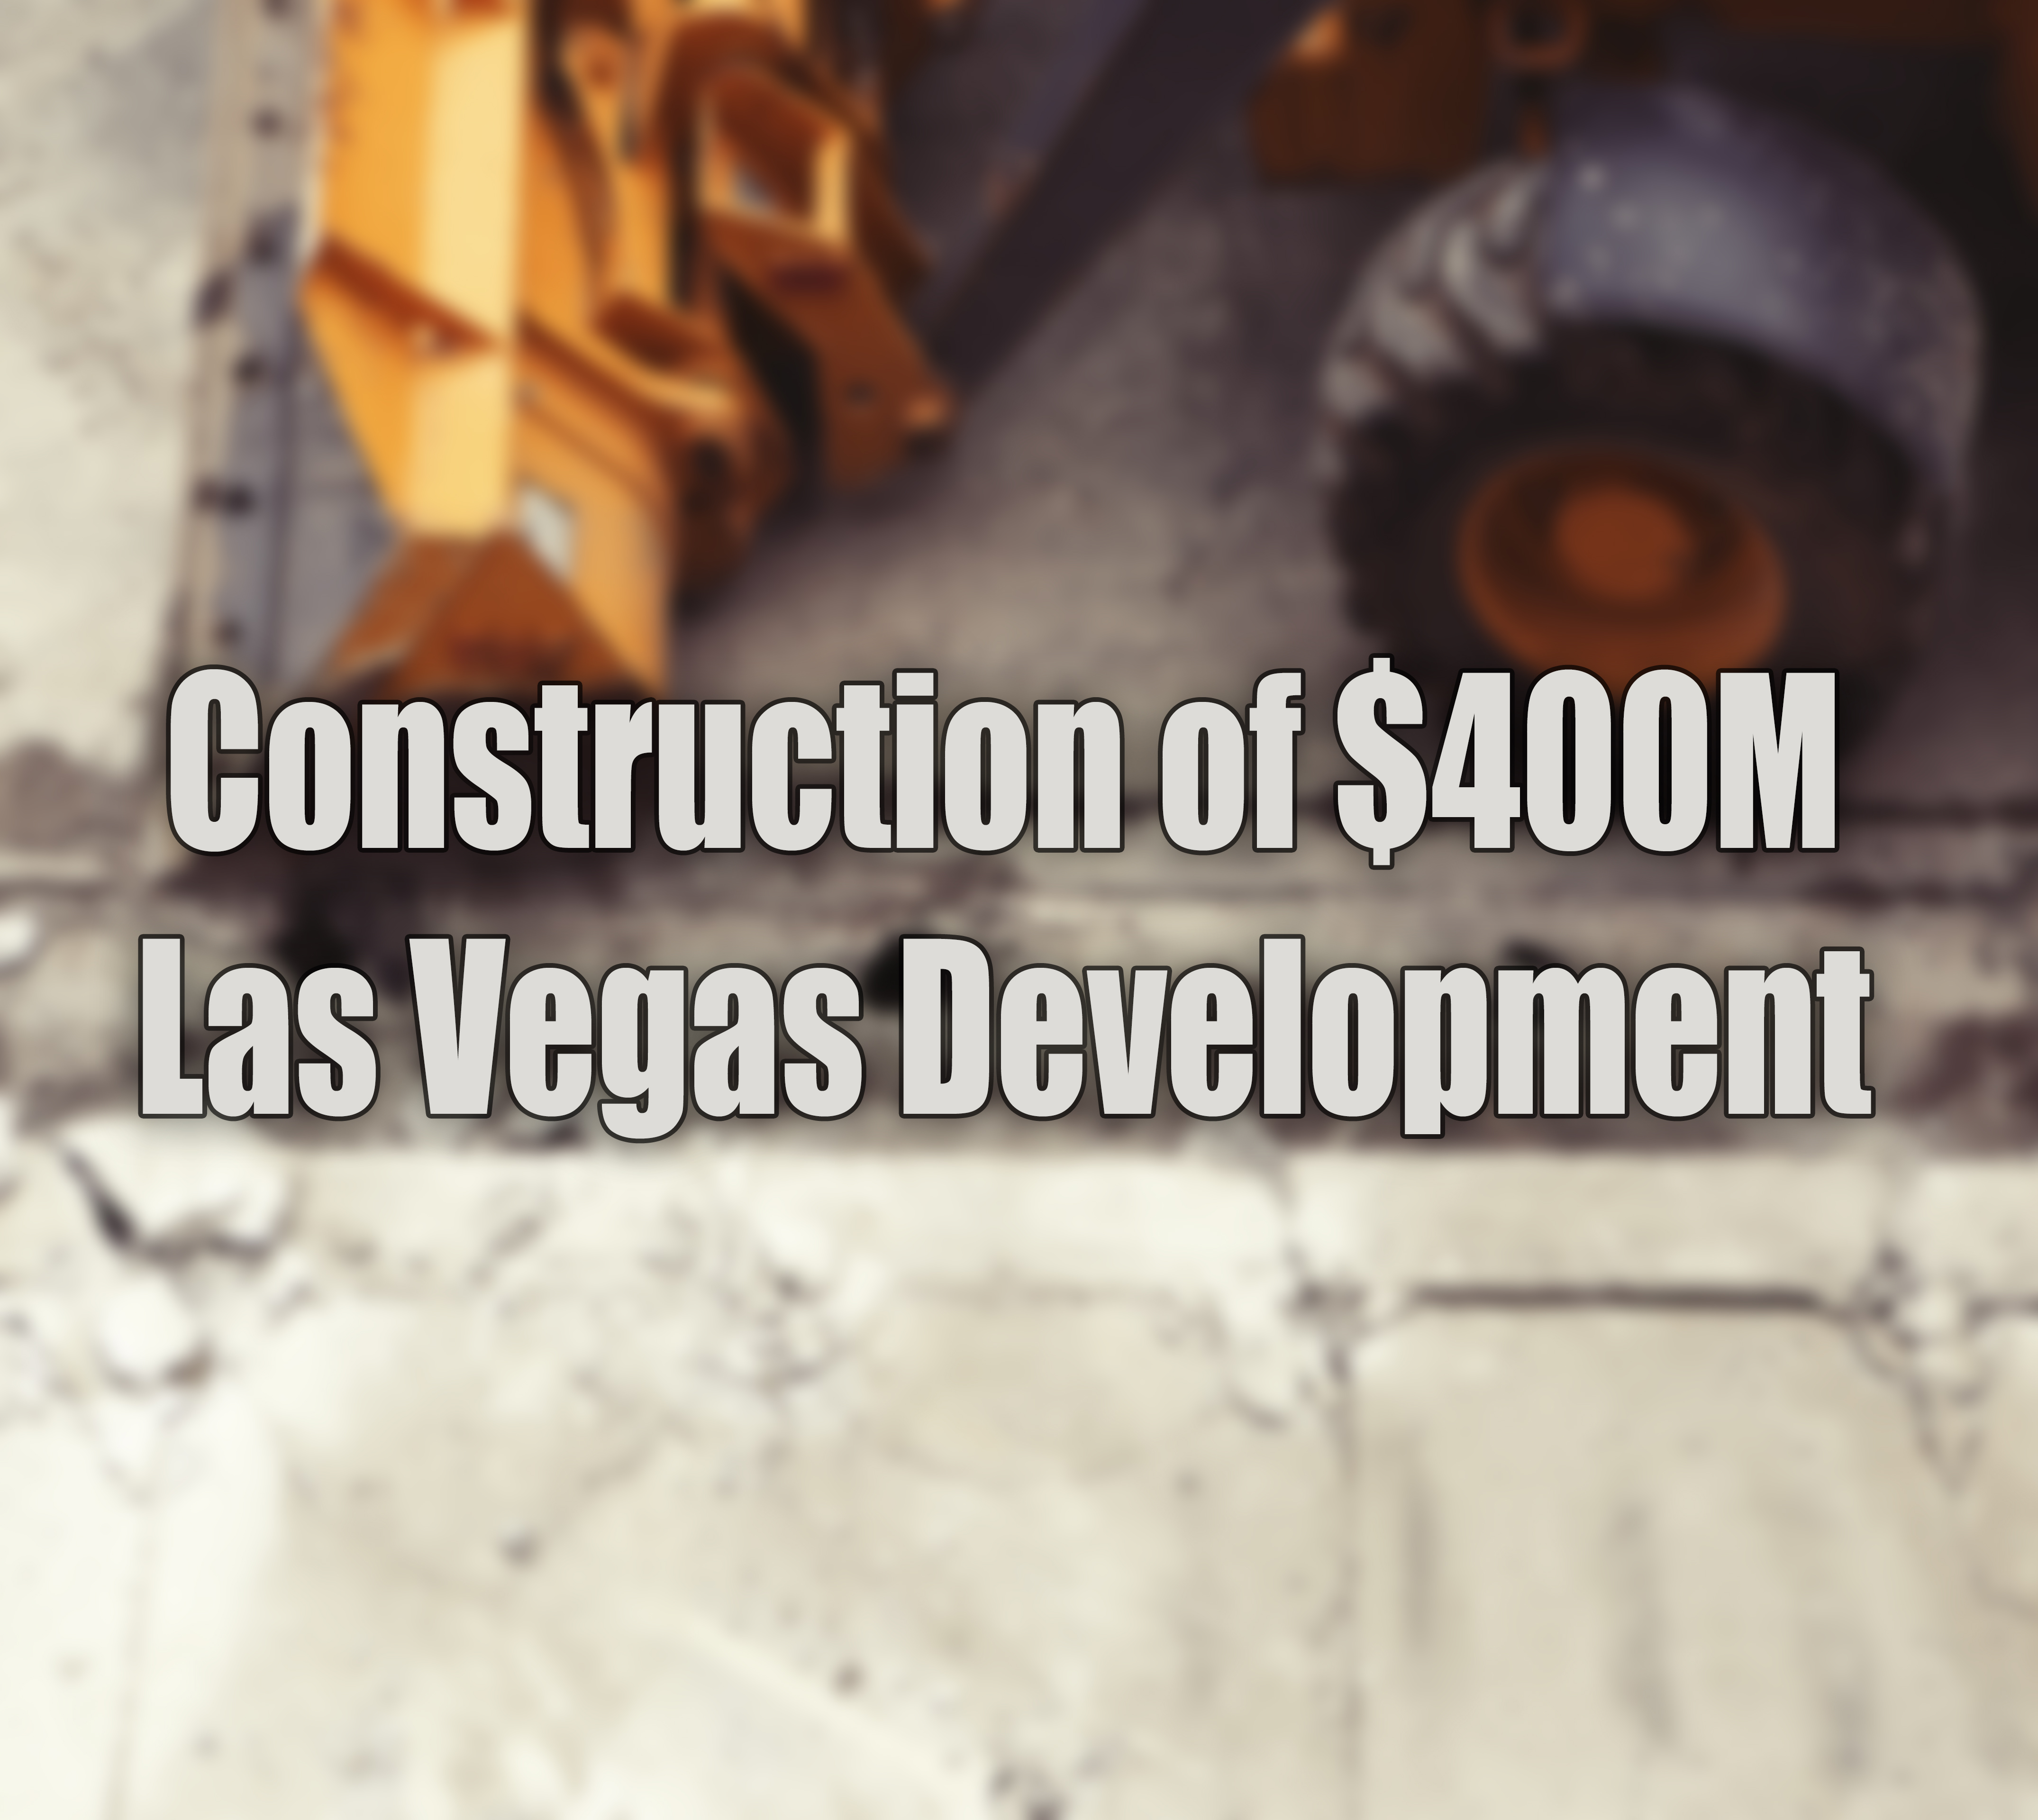 Construction Development in Las Vegas.jpg